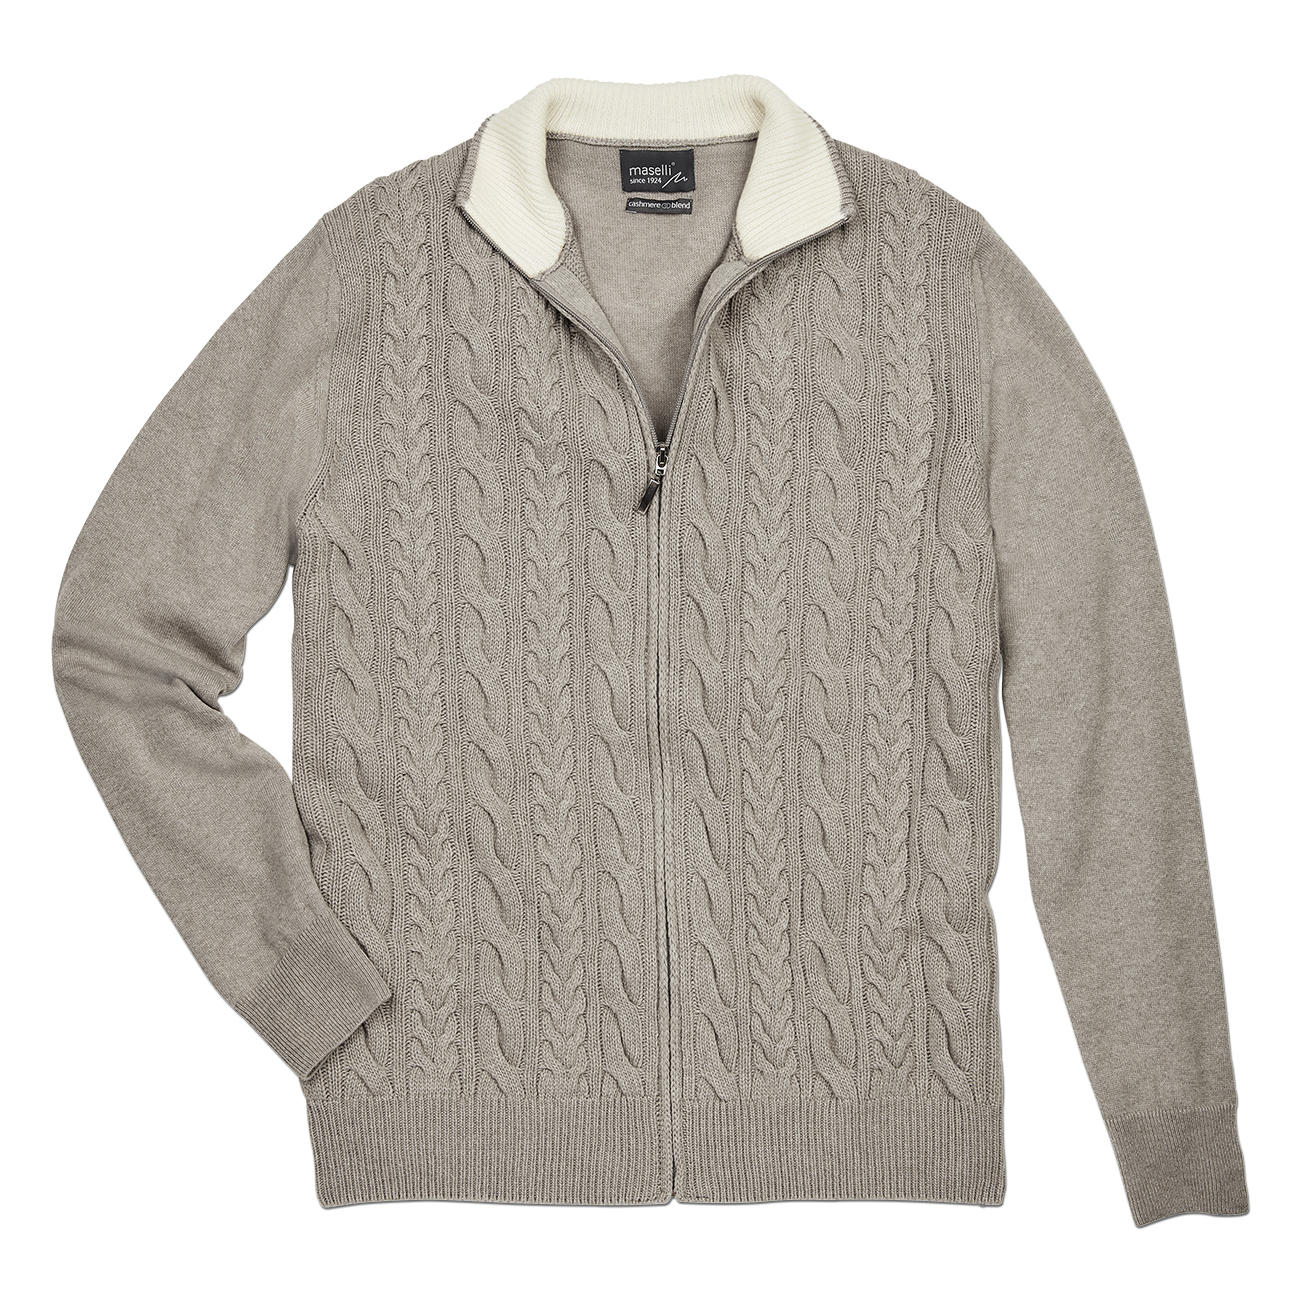 Maselli Braided Knit Zip Jacket | Discover classics